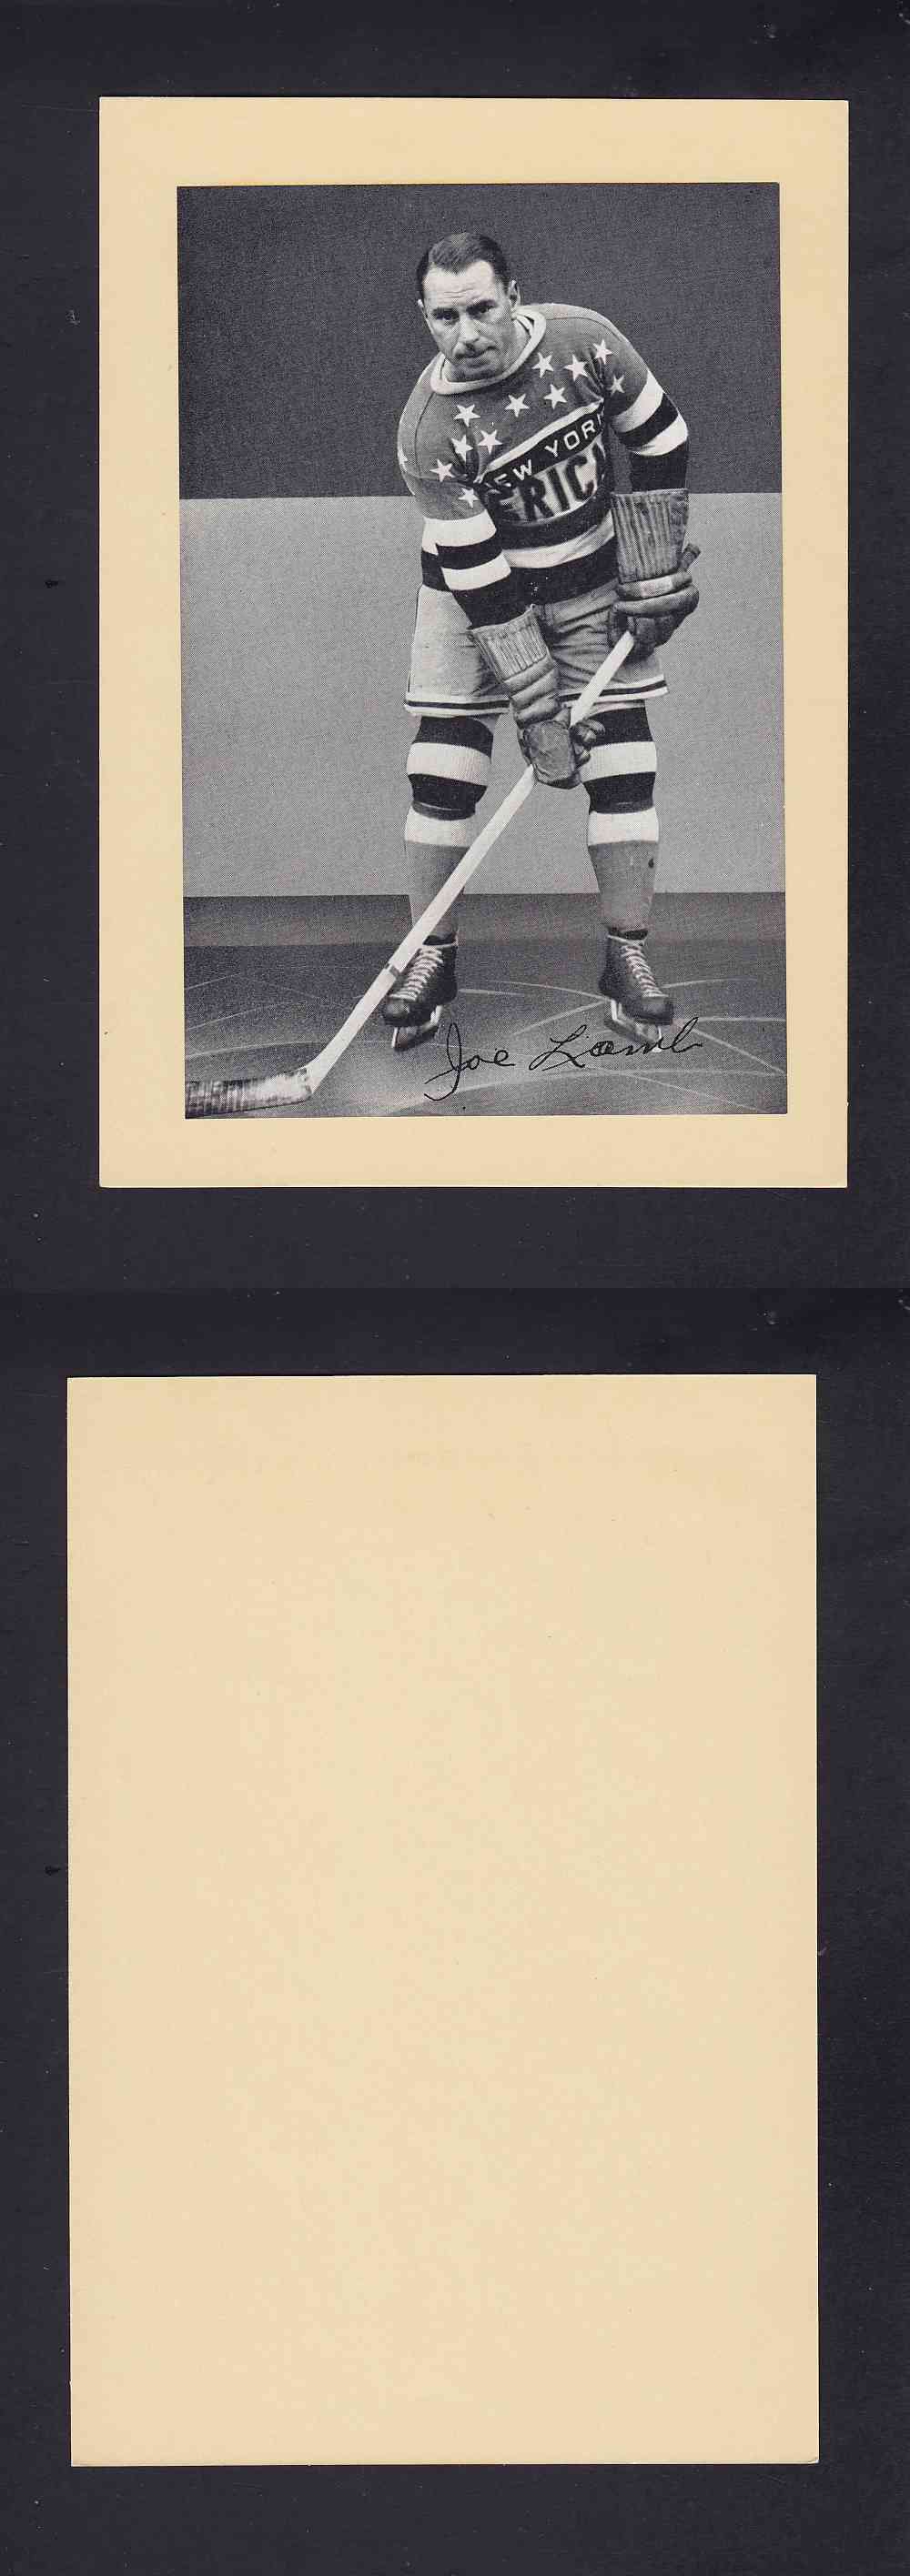 1934-43 BEEHIVE PHOTO GR.1 J. LAMB photo